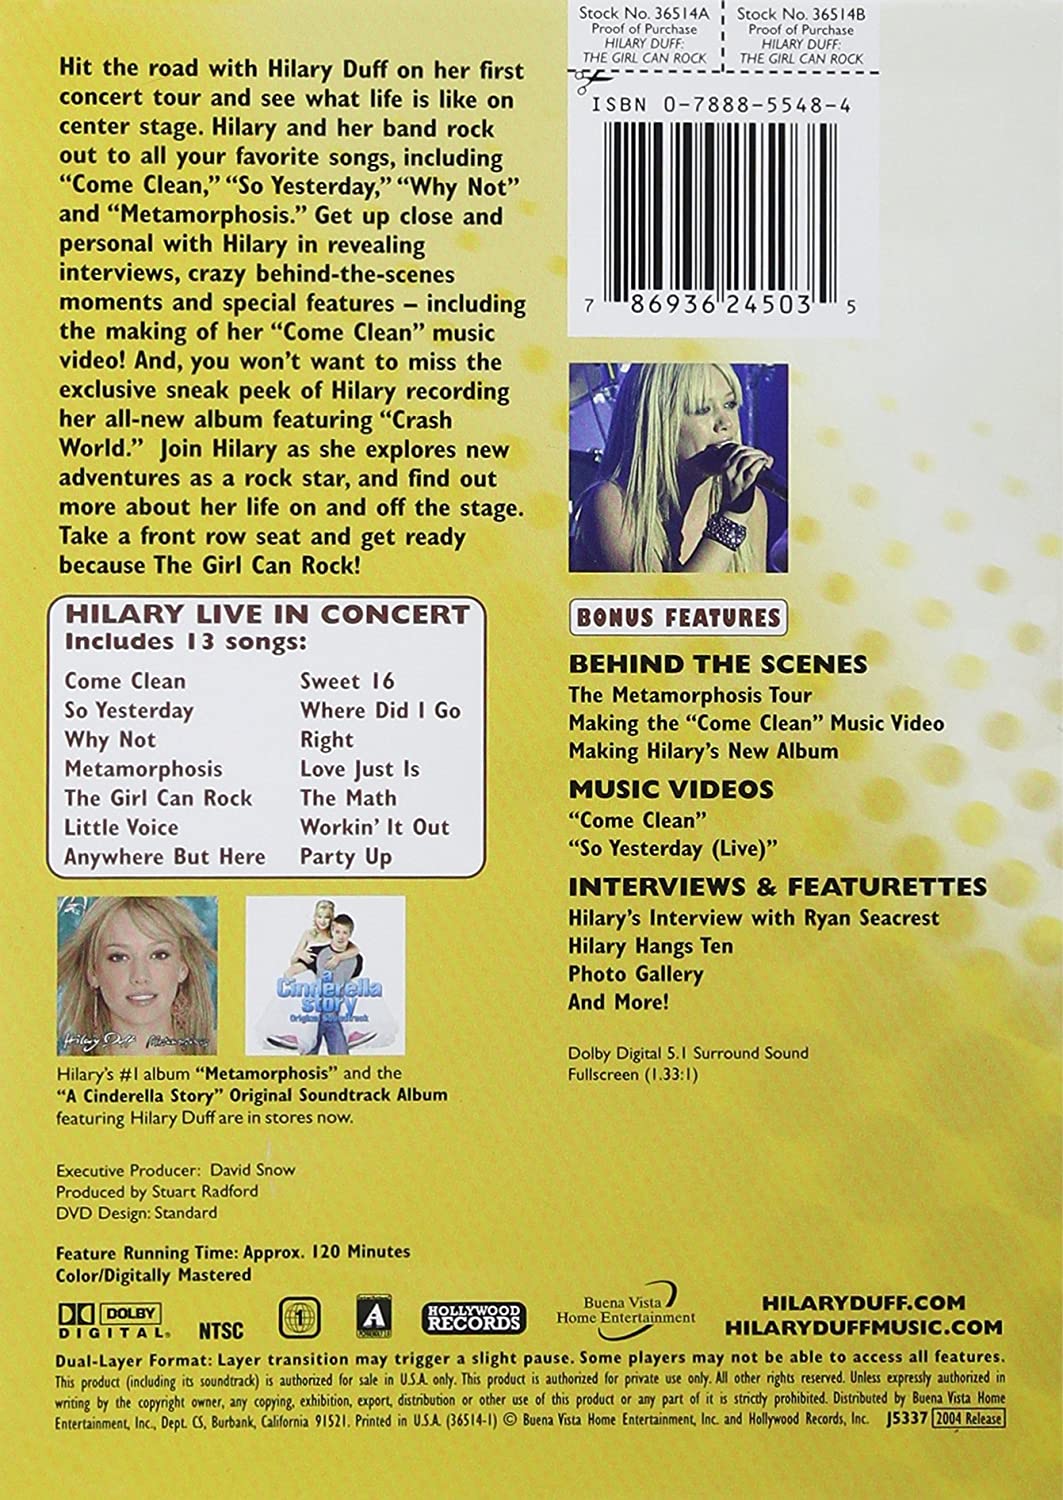 HILARY DUFF - THE GIRL CAN ROCK [DVD]